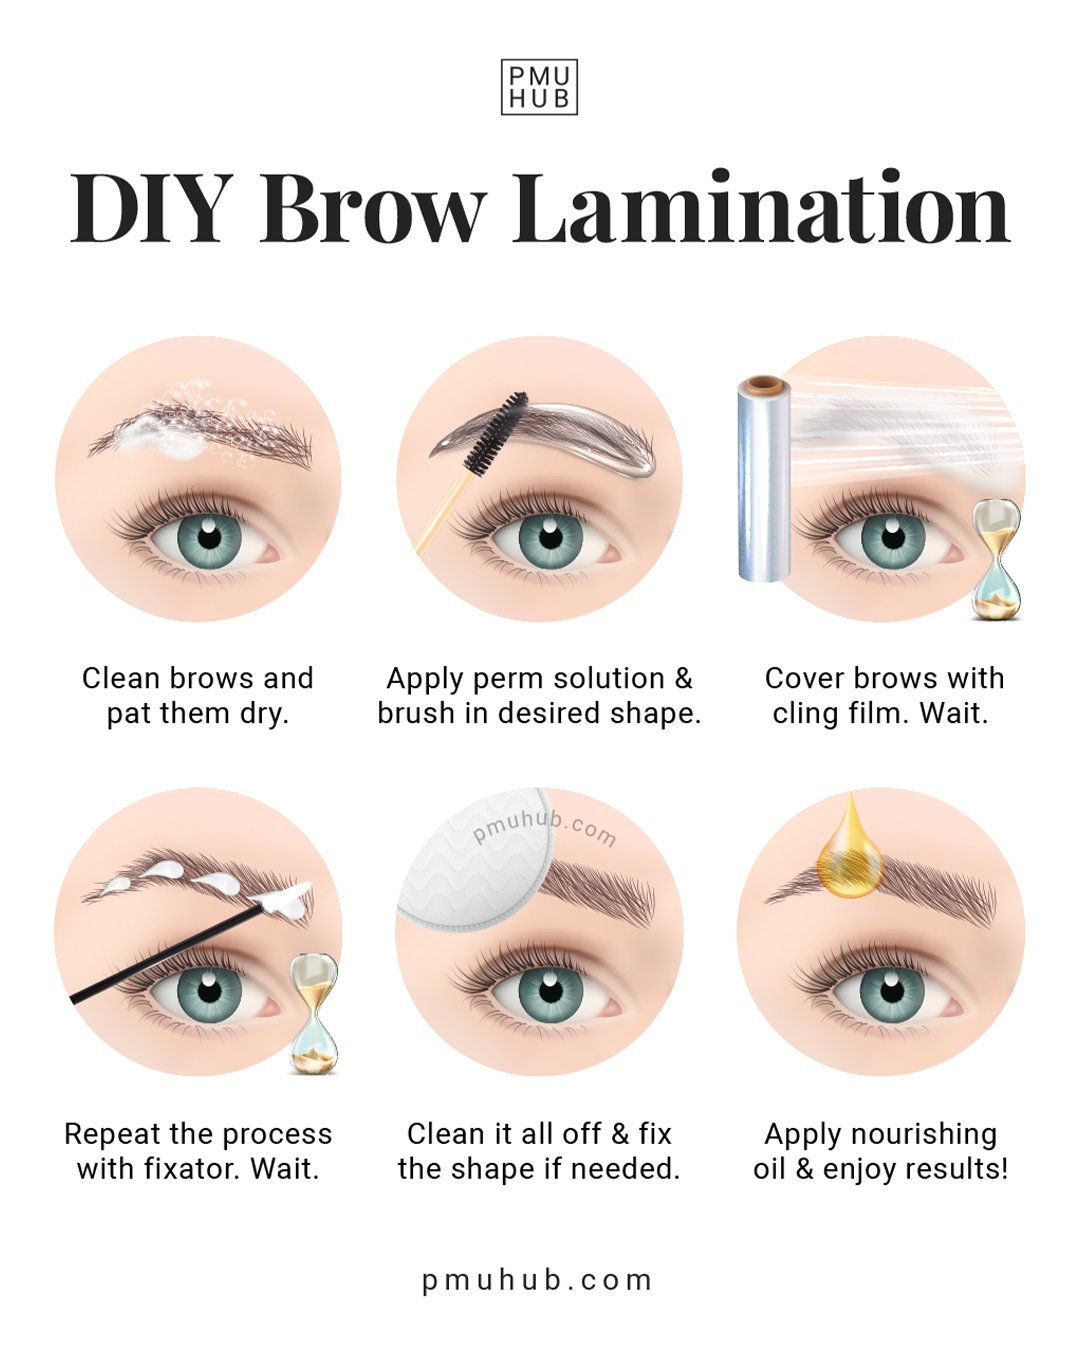 DIY brow lamination step by step